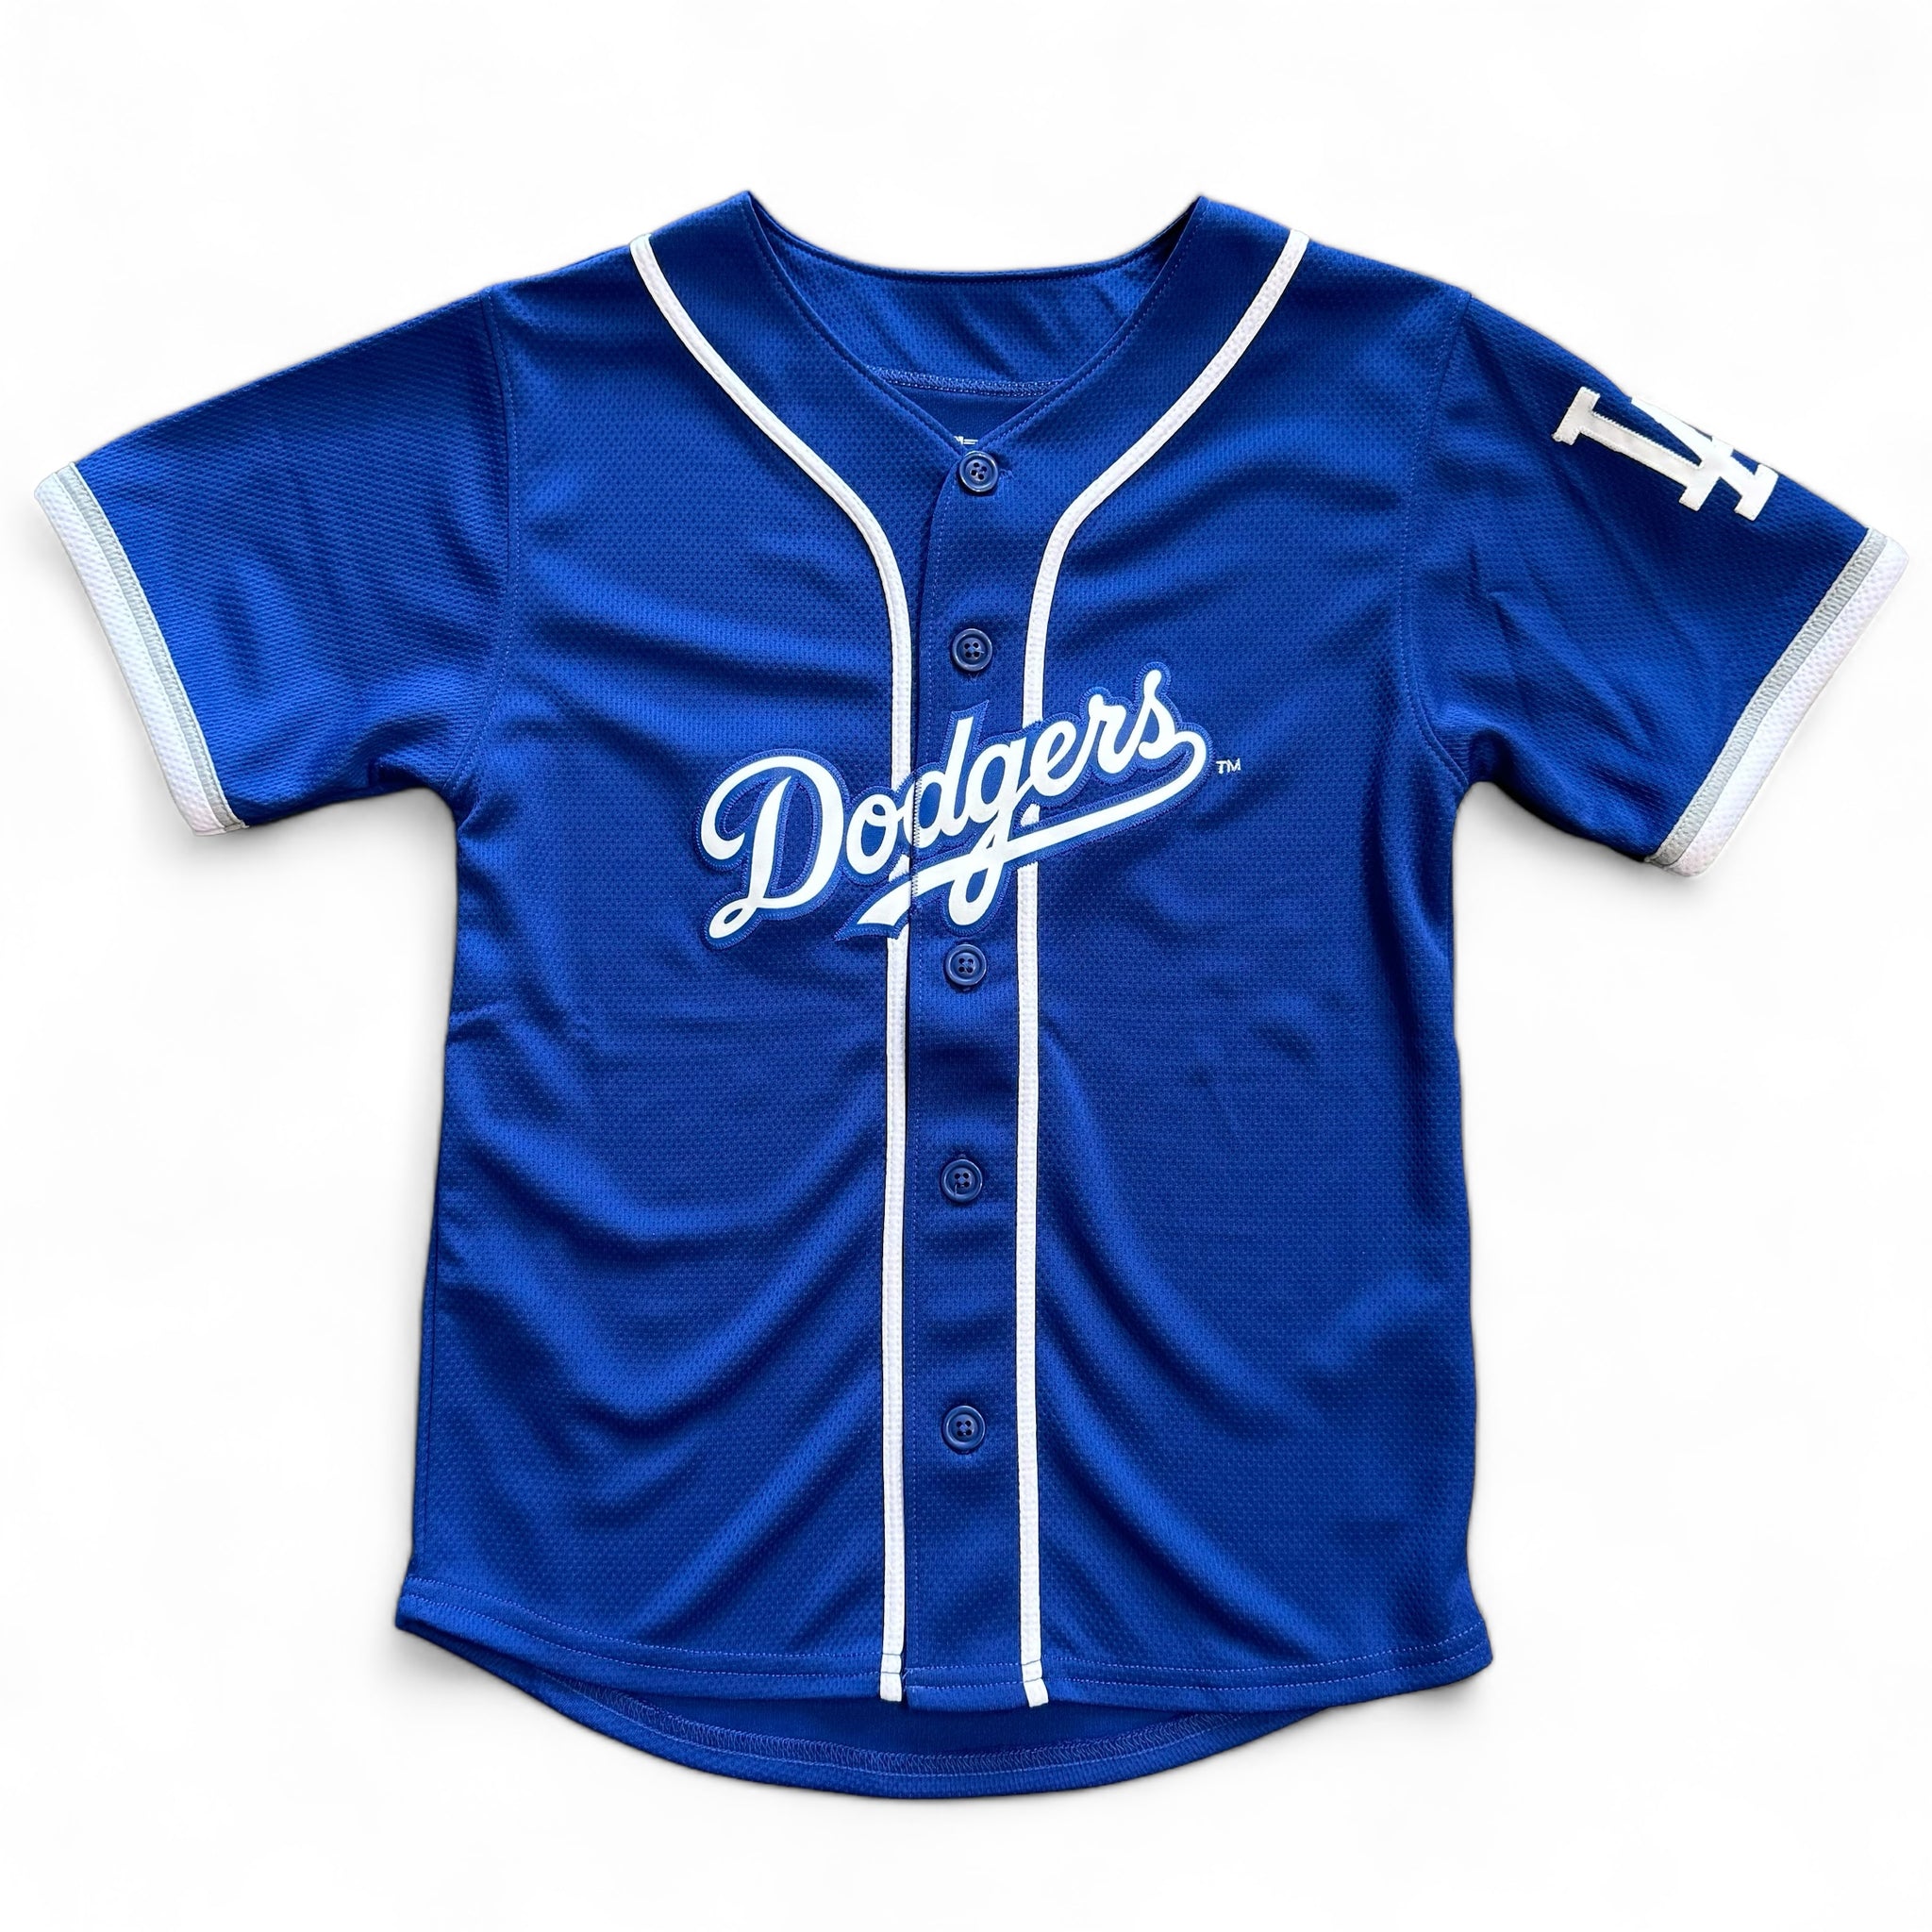 Los Angeles Dodgers Kids Fashion Jersey - Blue